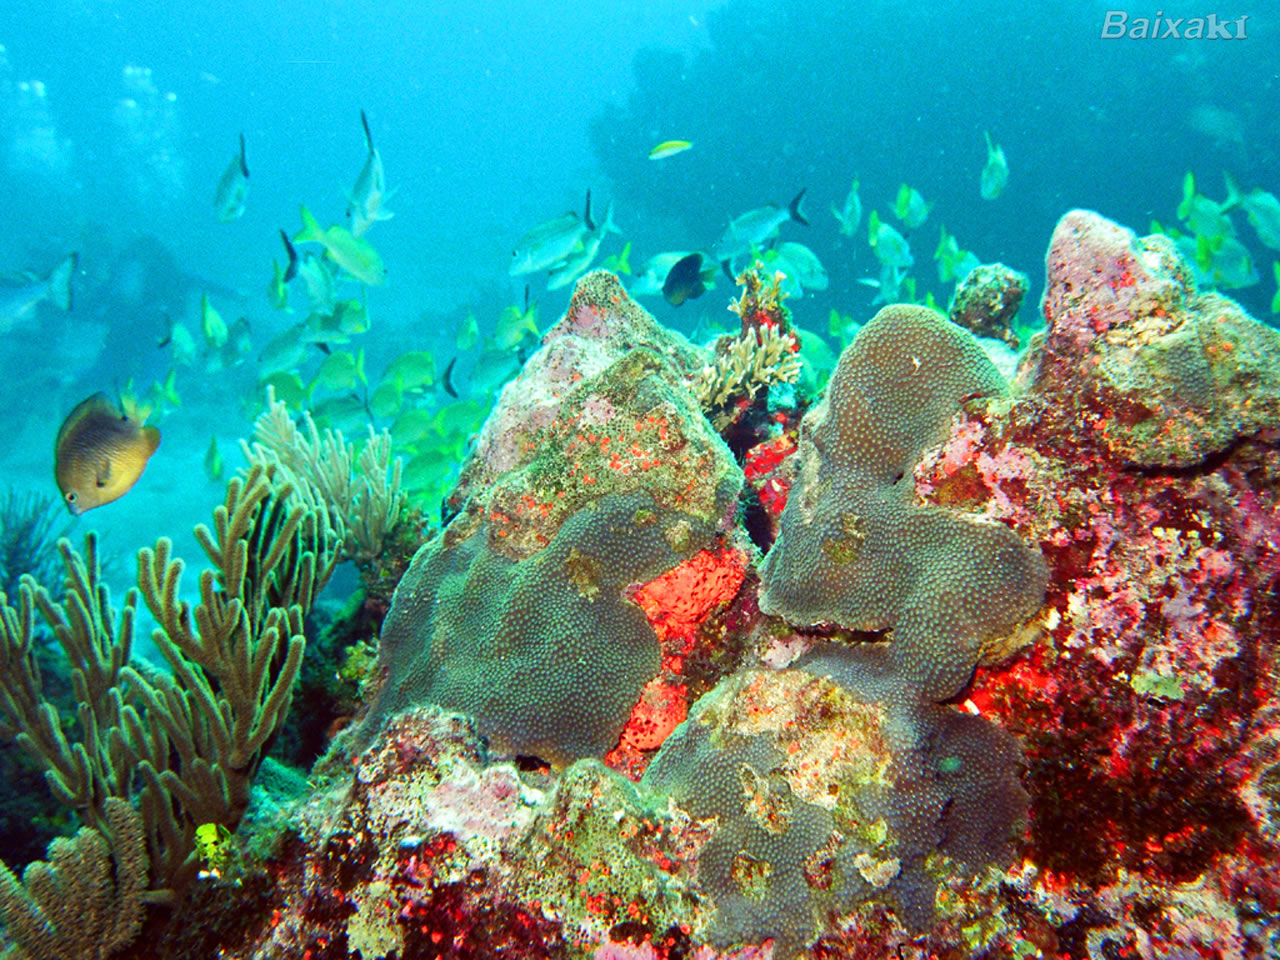 tapete fundo do mar,riff,korallenriff,unter wasser,meeresbiologie,koralle